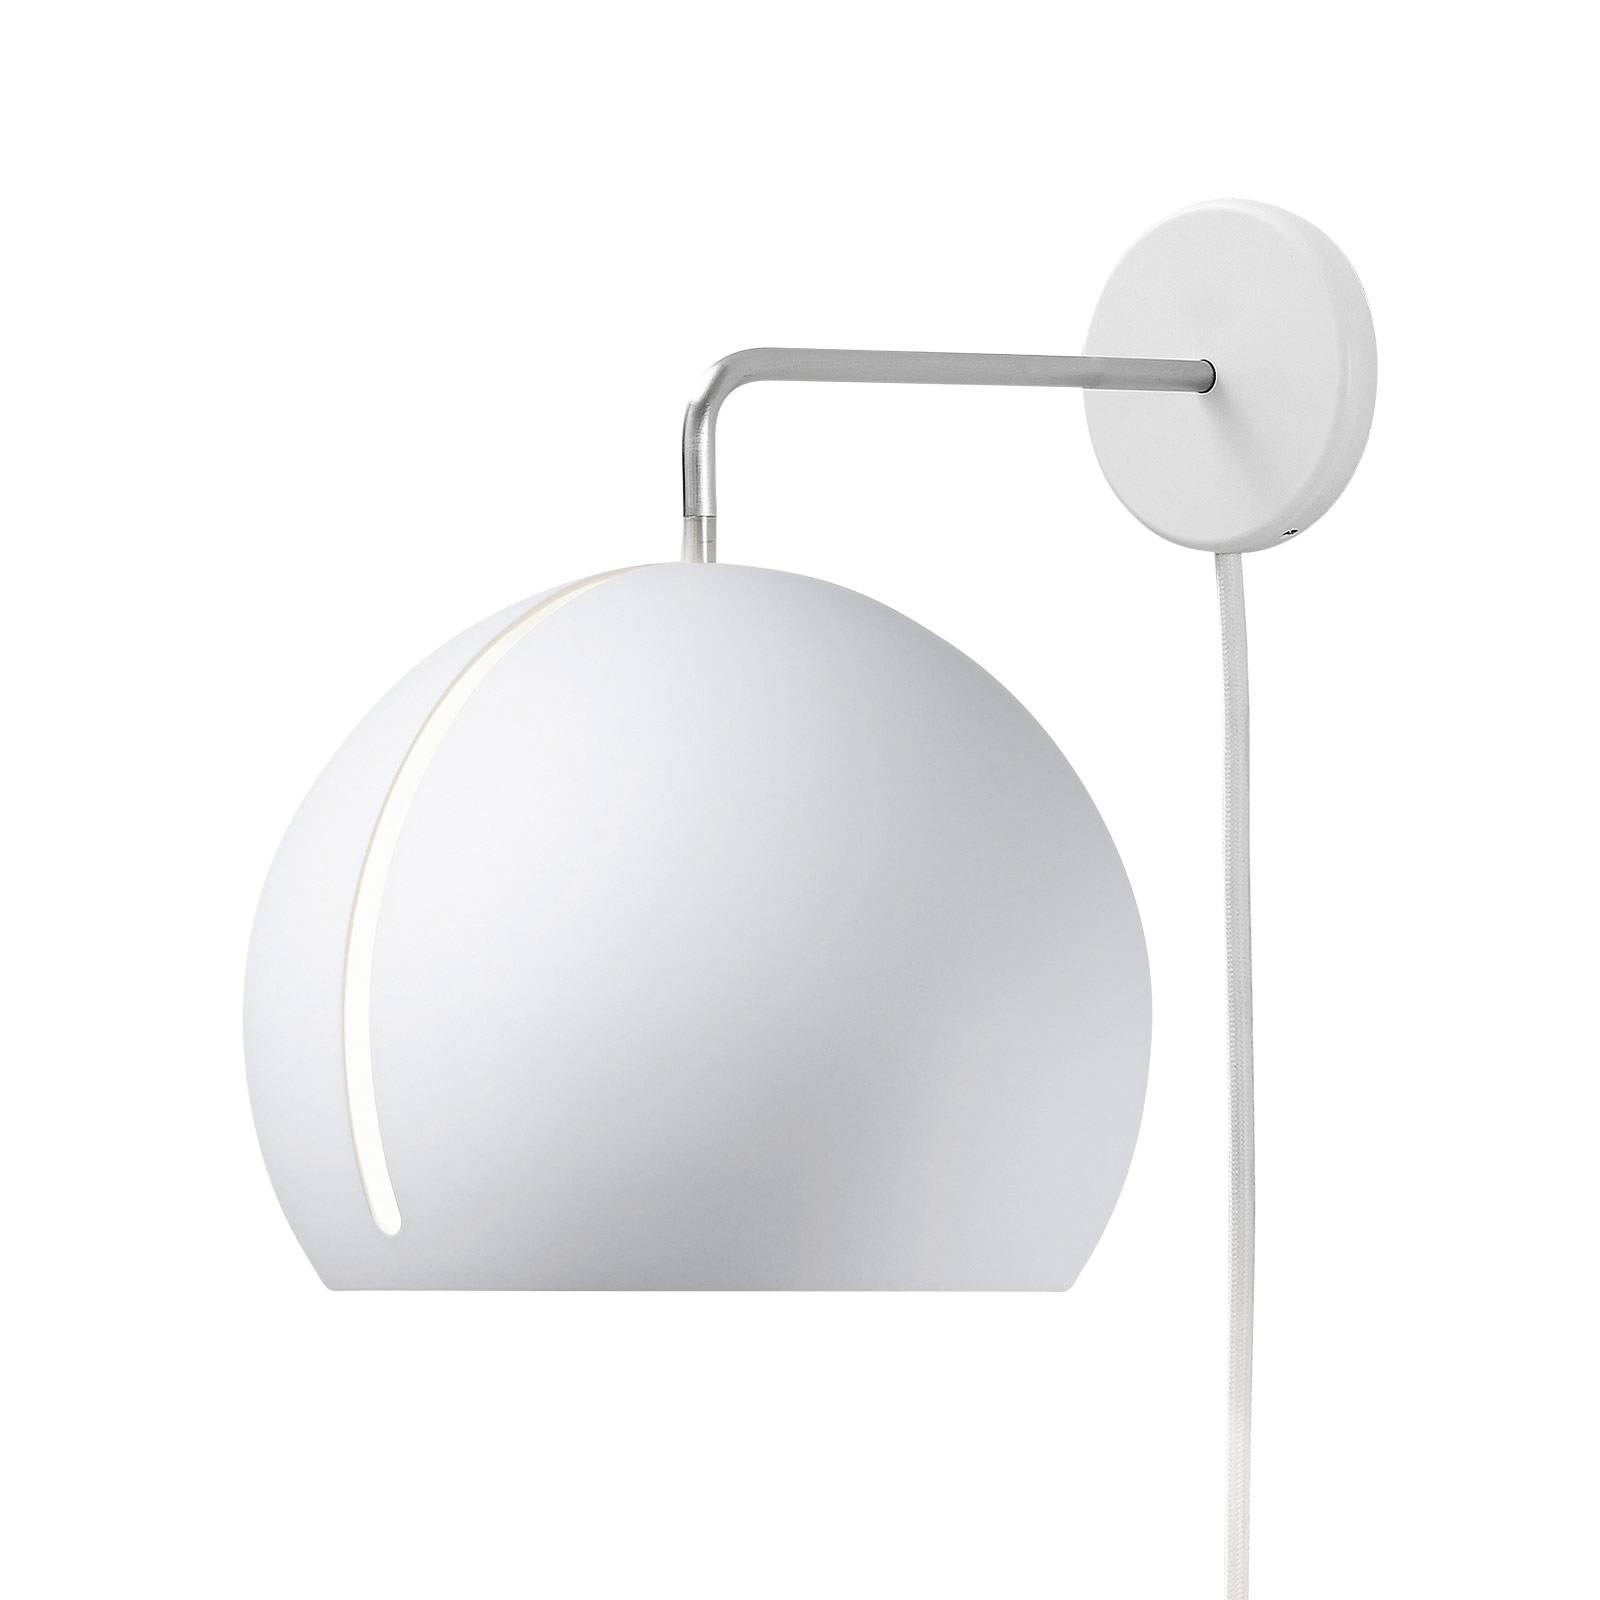 Nyta Tilt Globe Wall Wandlampe mit Stecker, weiß